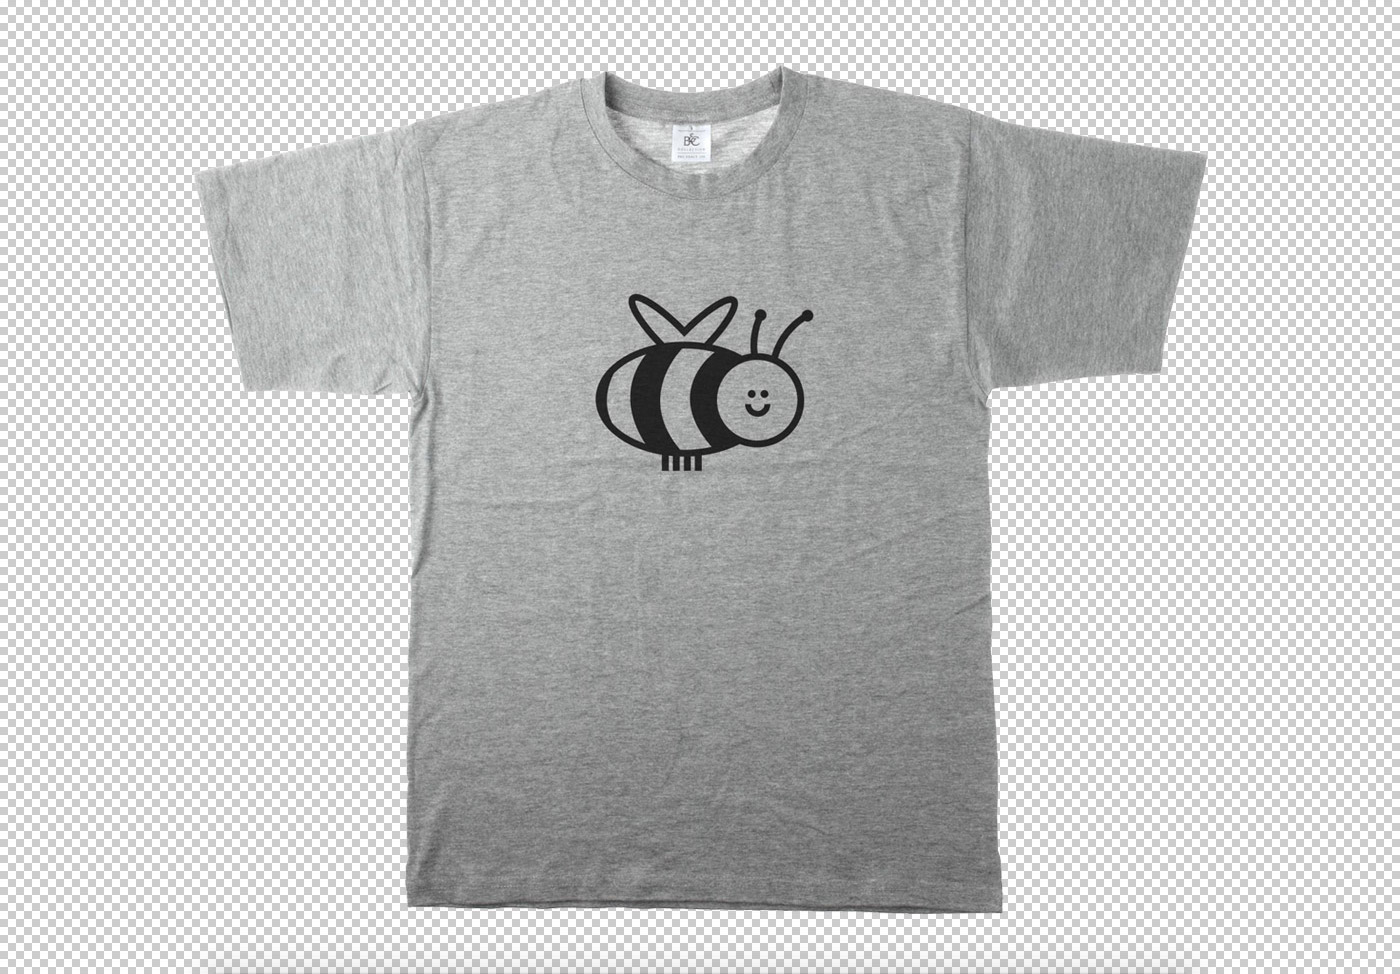 VOJD: "Bee" T-Shirt